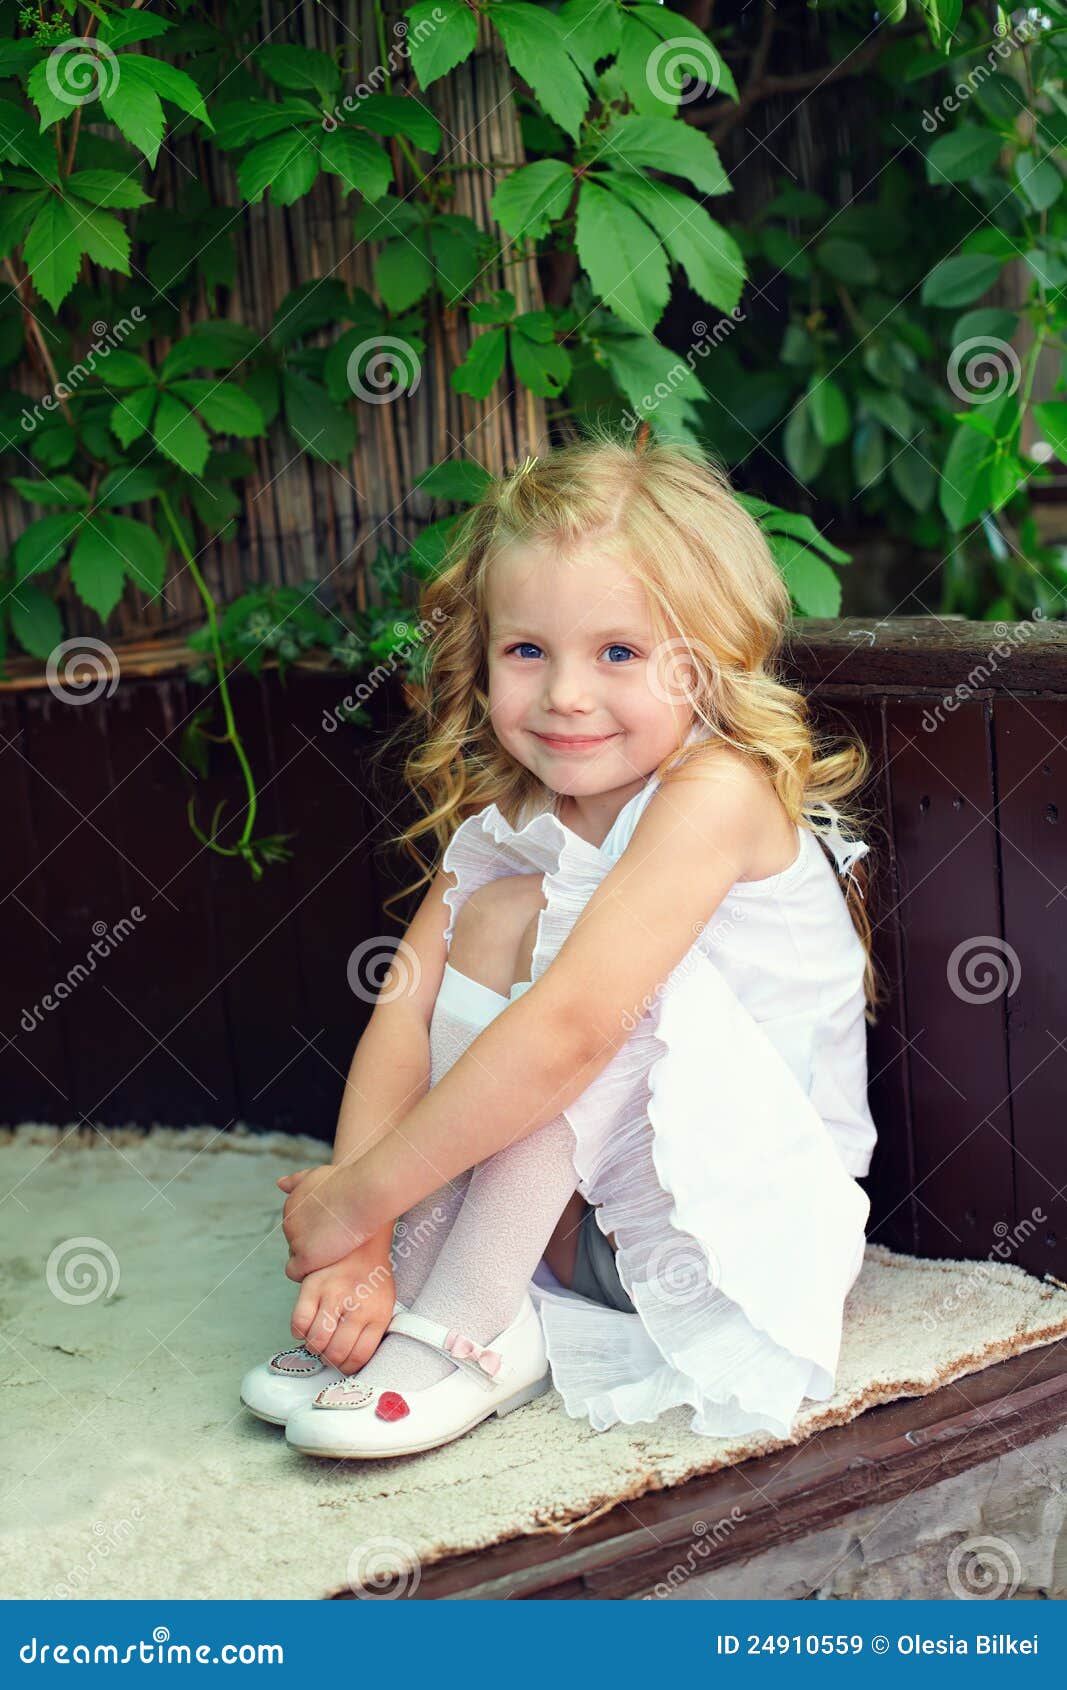 little baby girl sitting bench garden 24910559